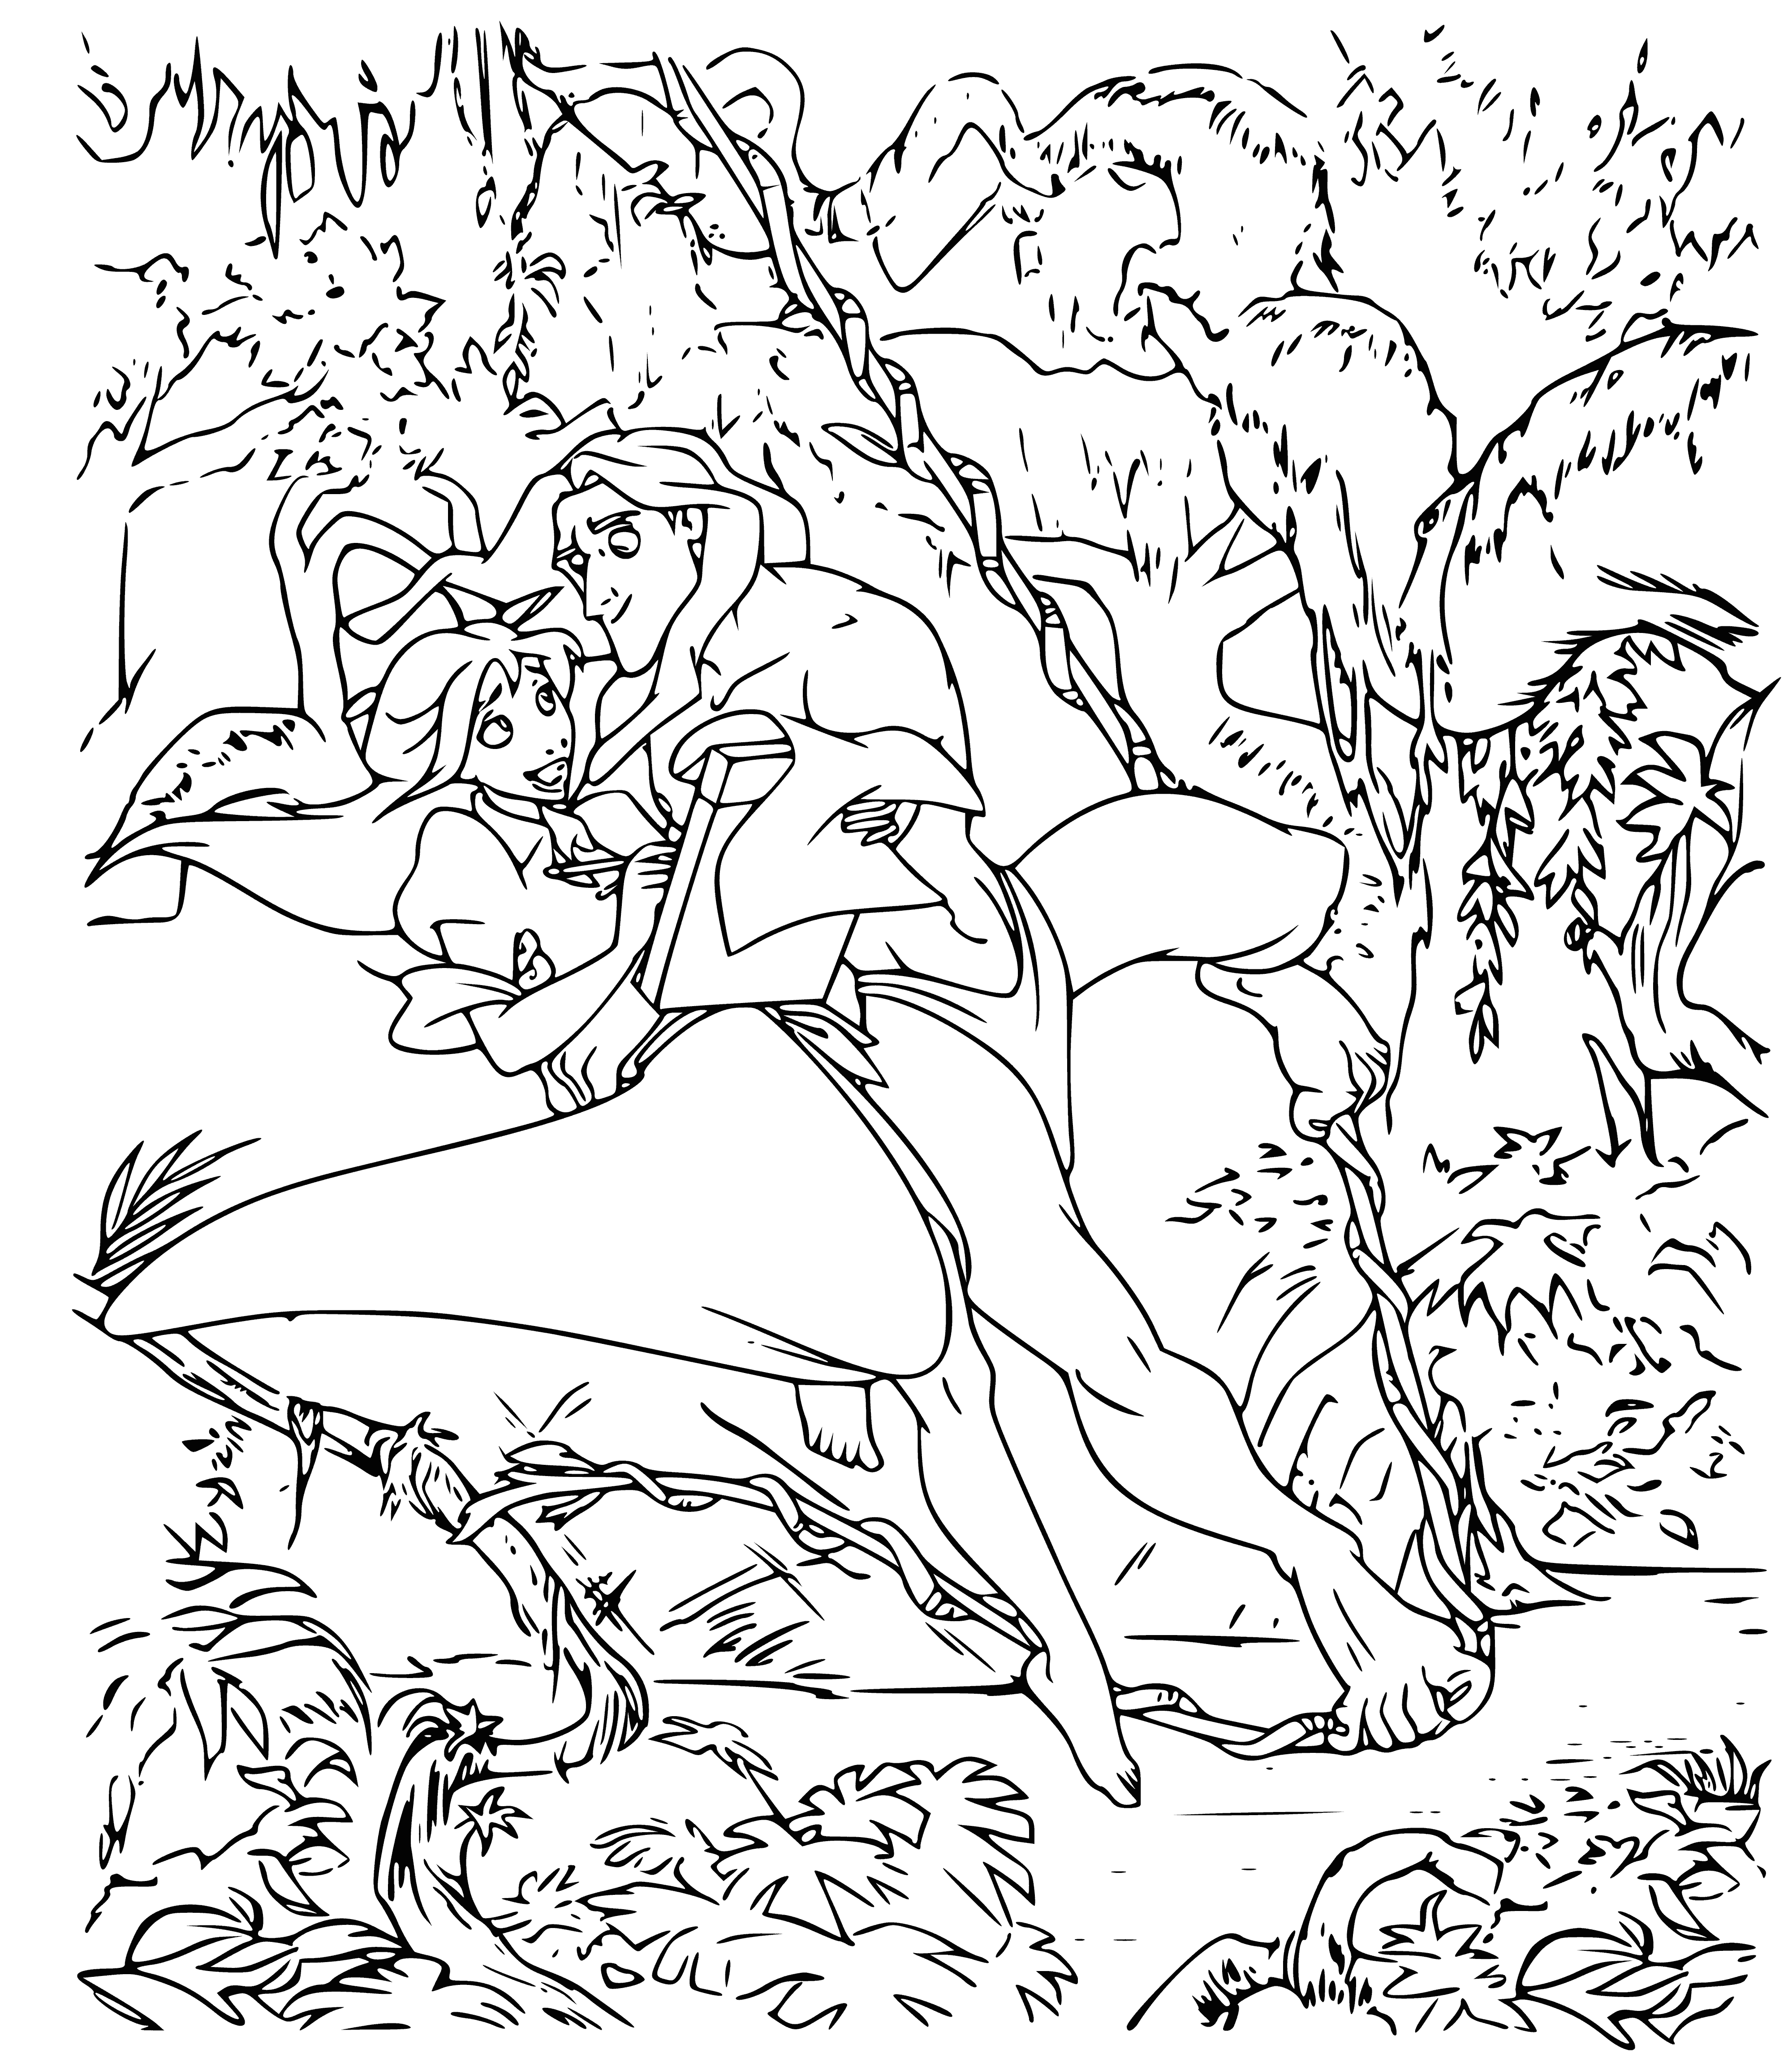 Tarzan and Jane coloring page